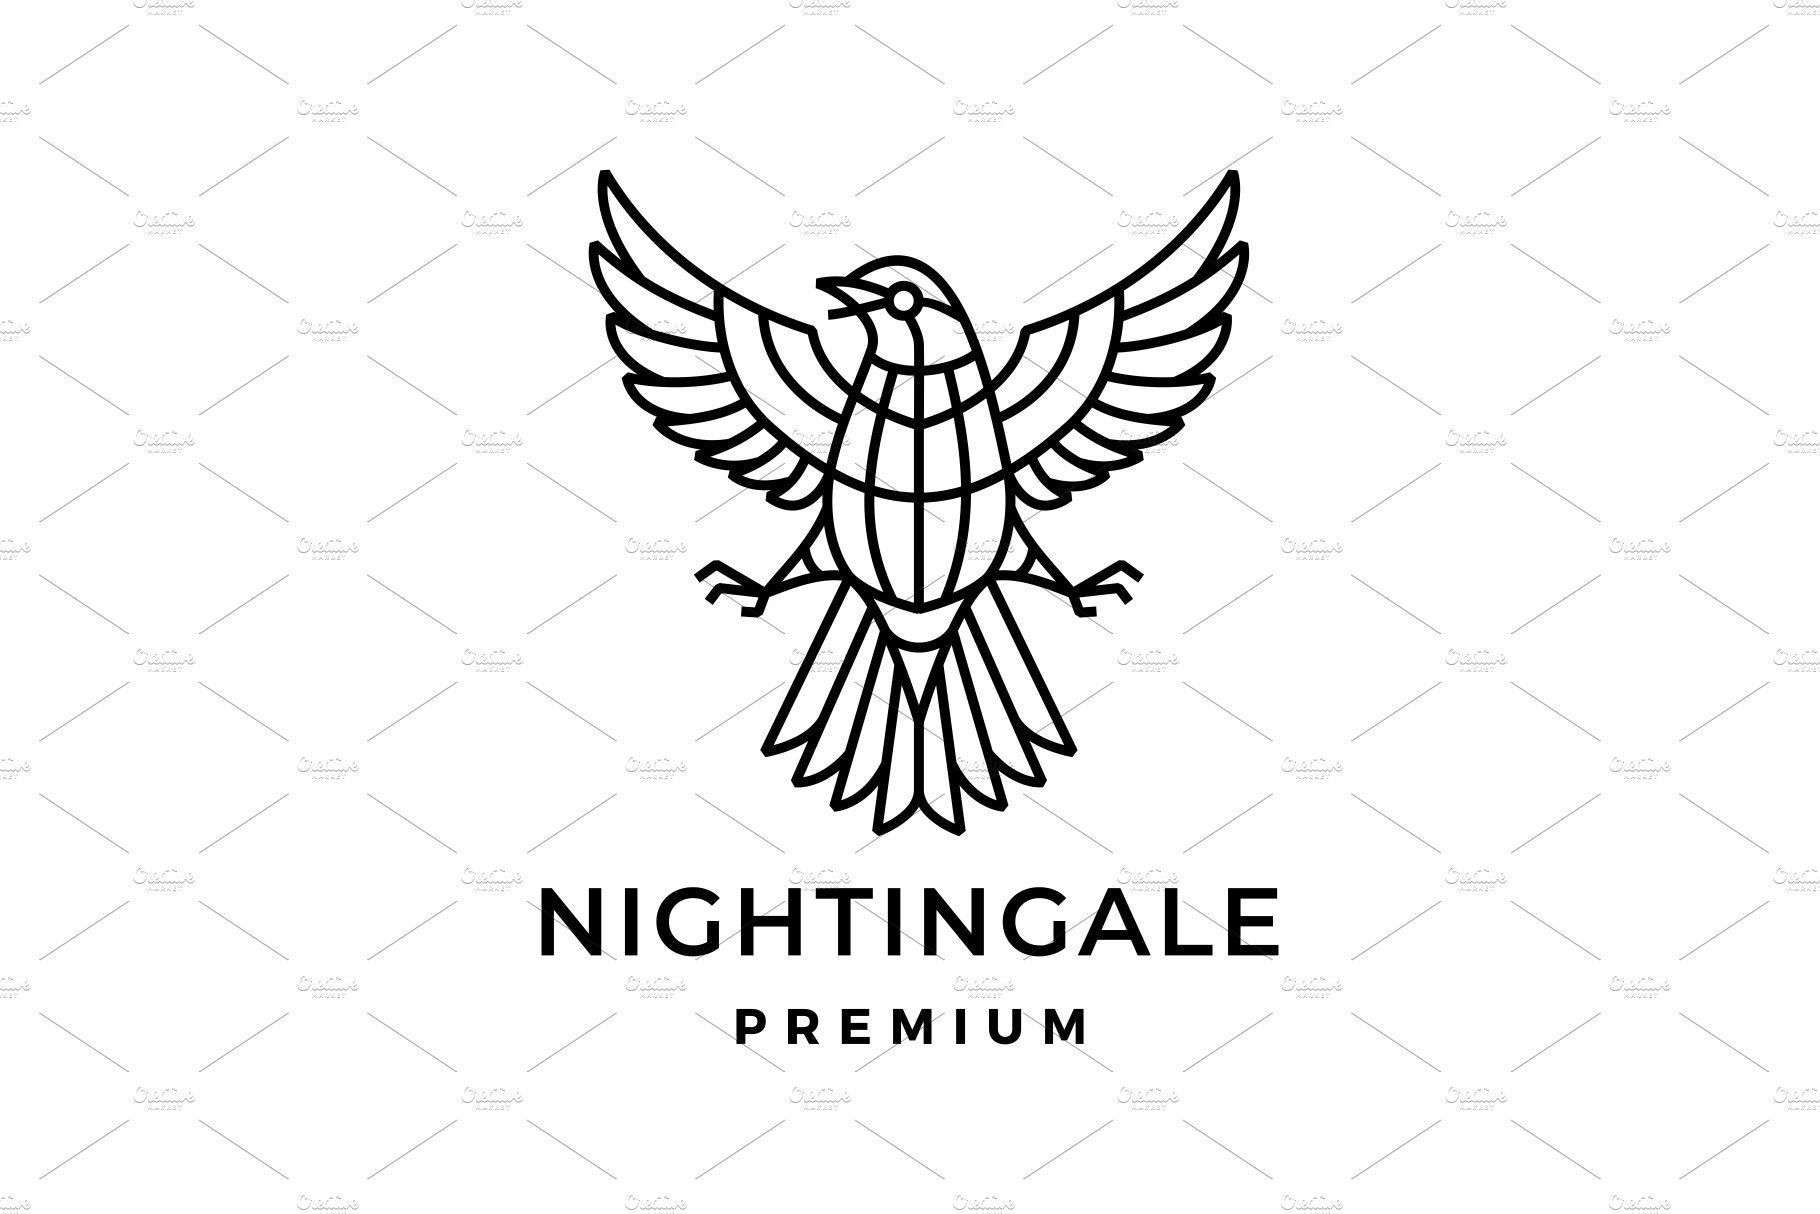 nightingale bird monoline logo cover image.